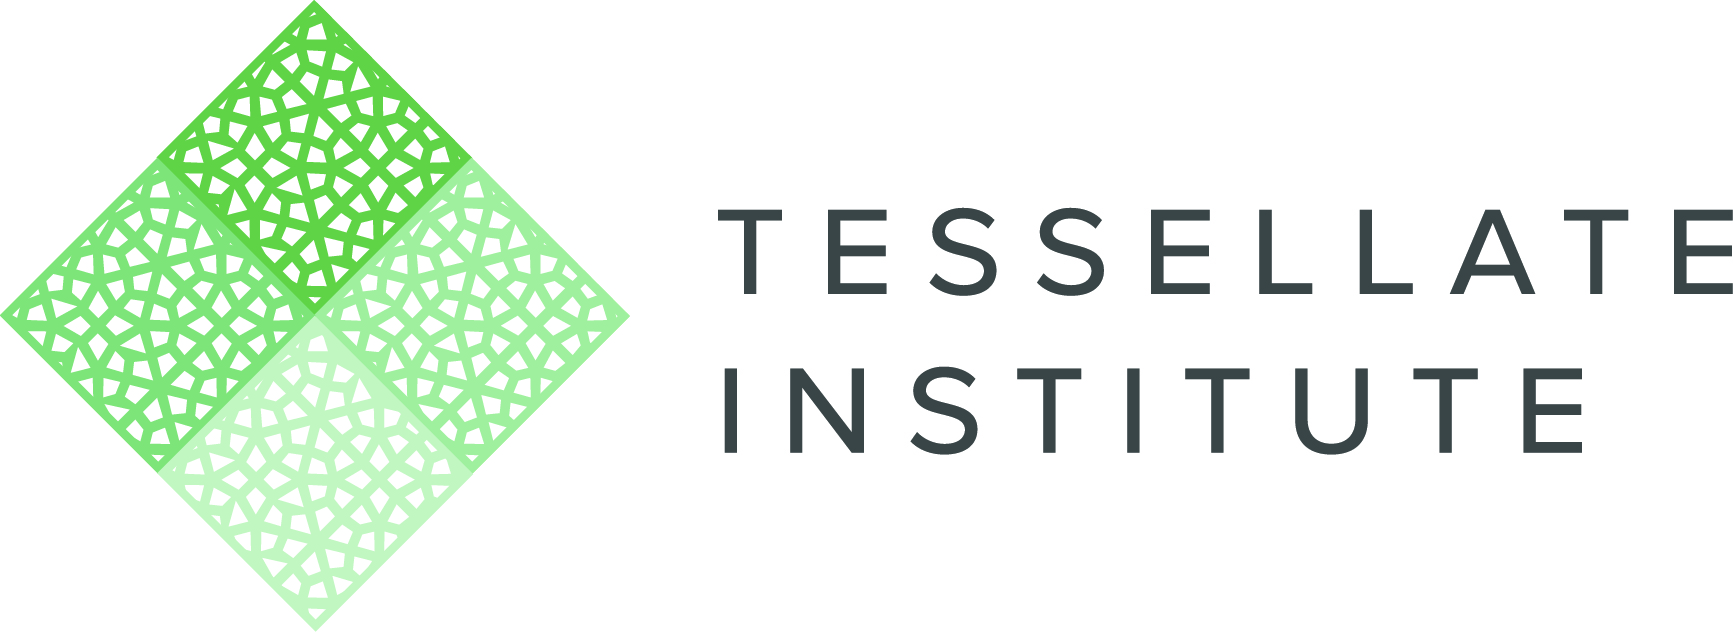 The Tessellate Institute